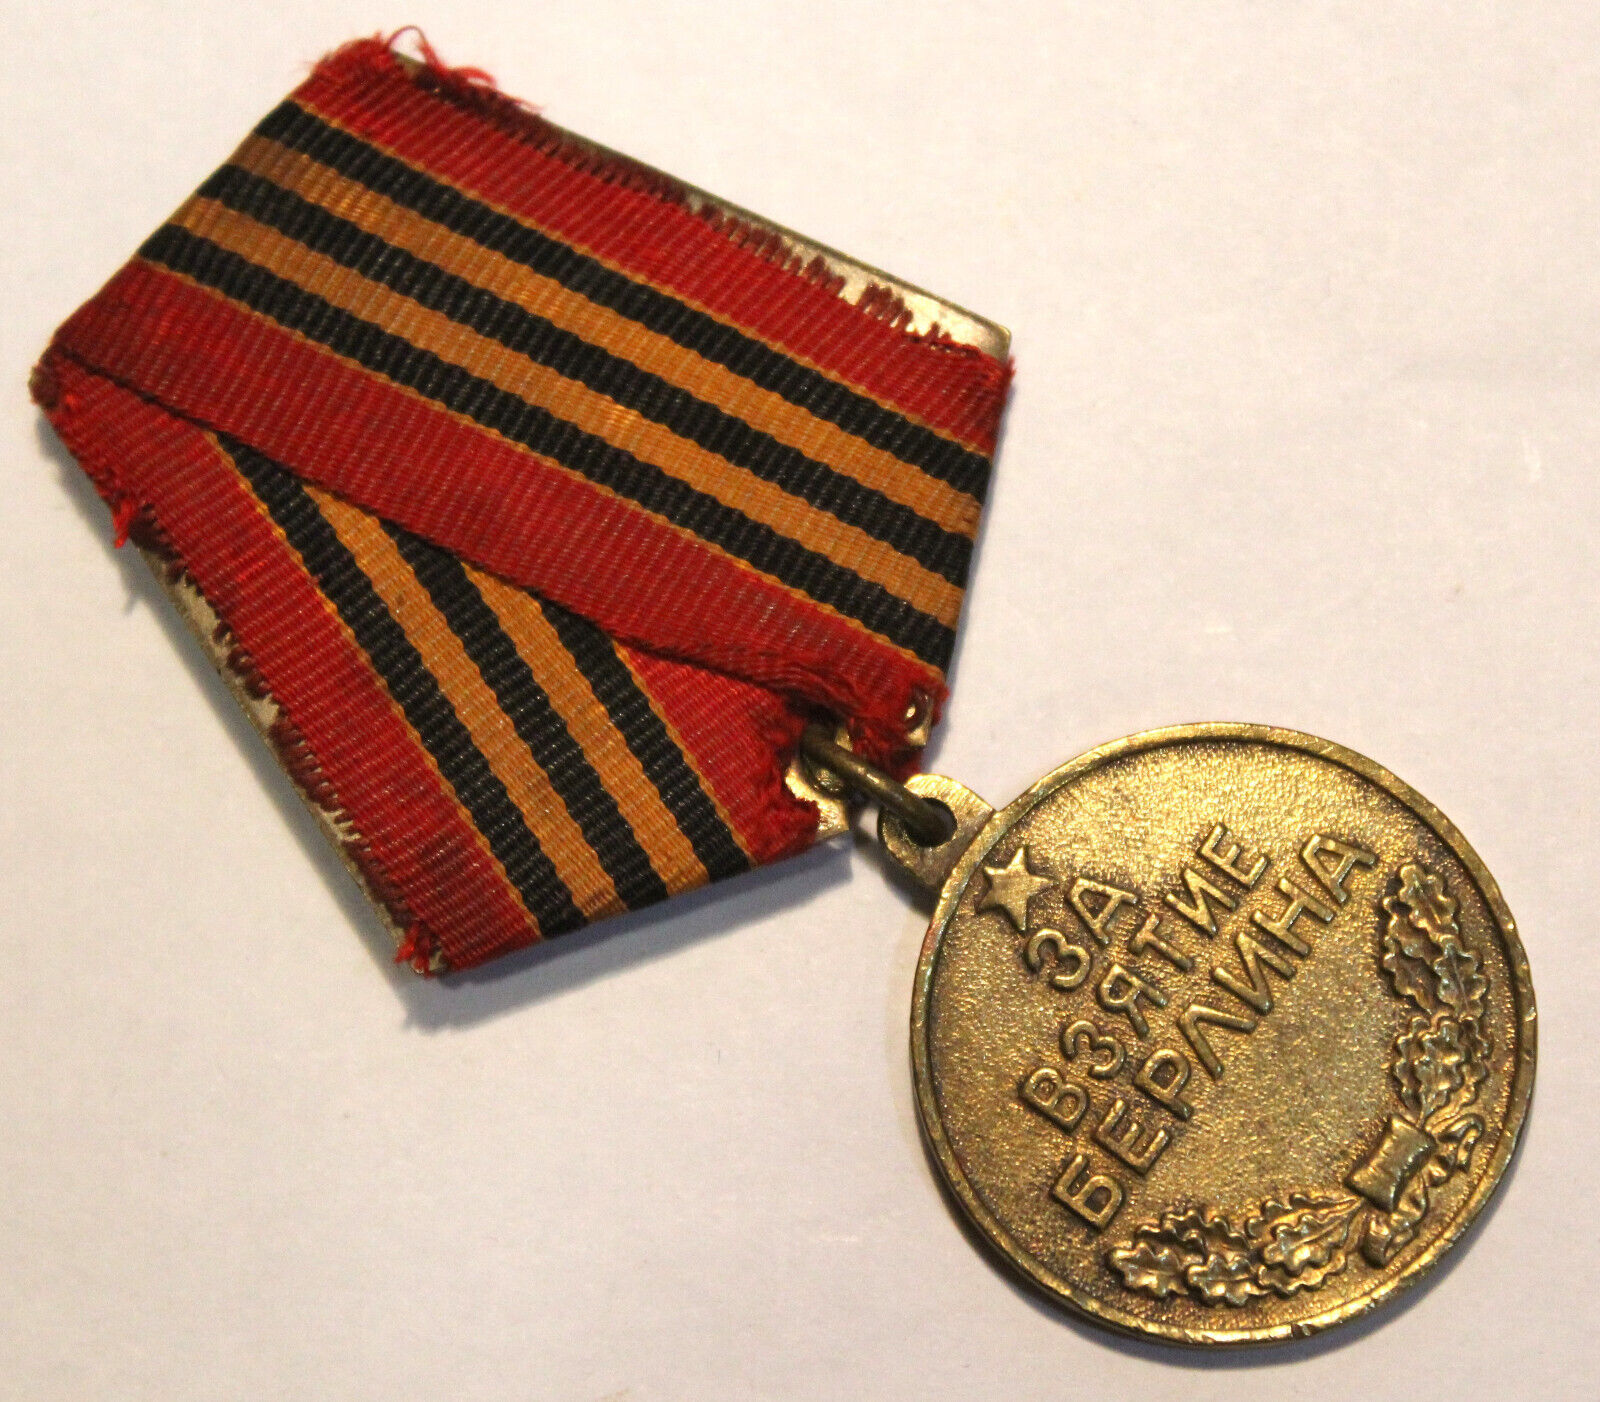 Soviet USSR Russia WWII Capture of Berlin Medal